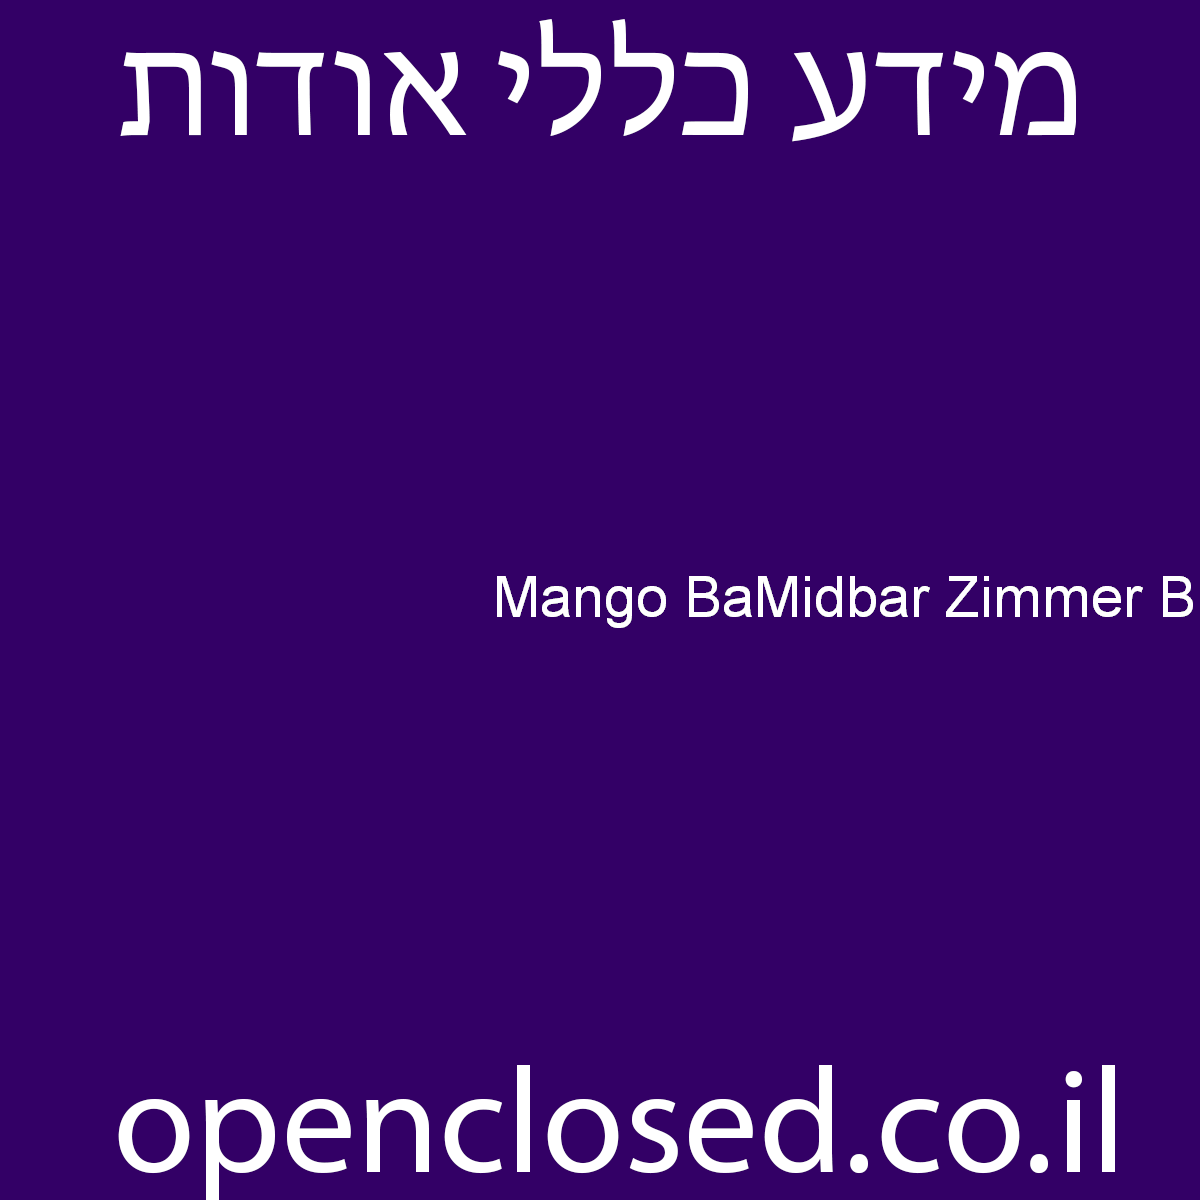 Mango BaMidbar Zimmer B